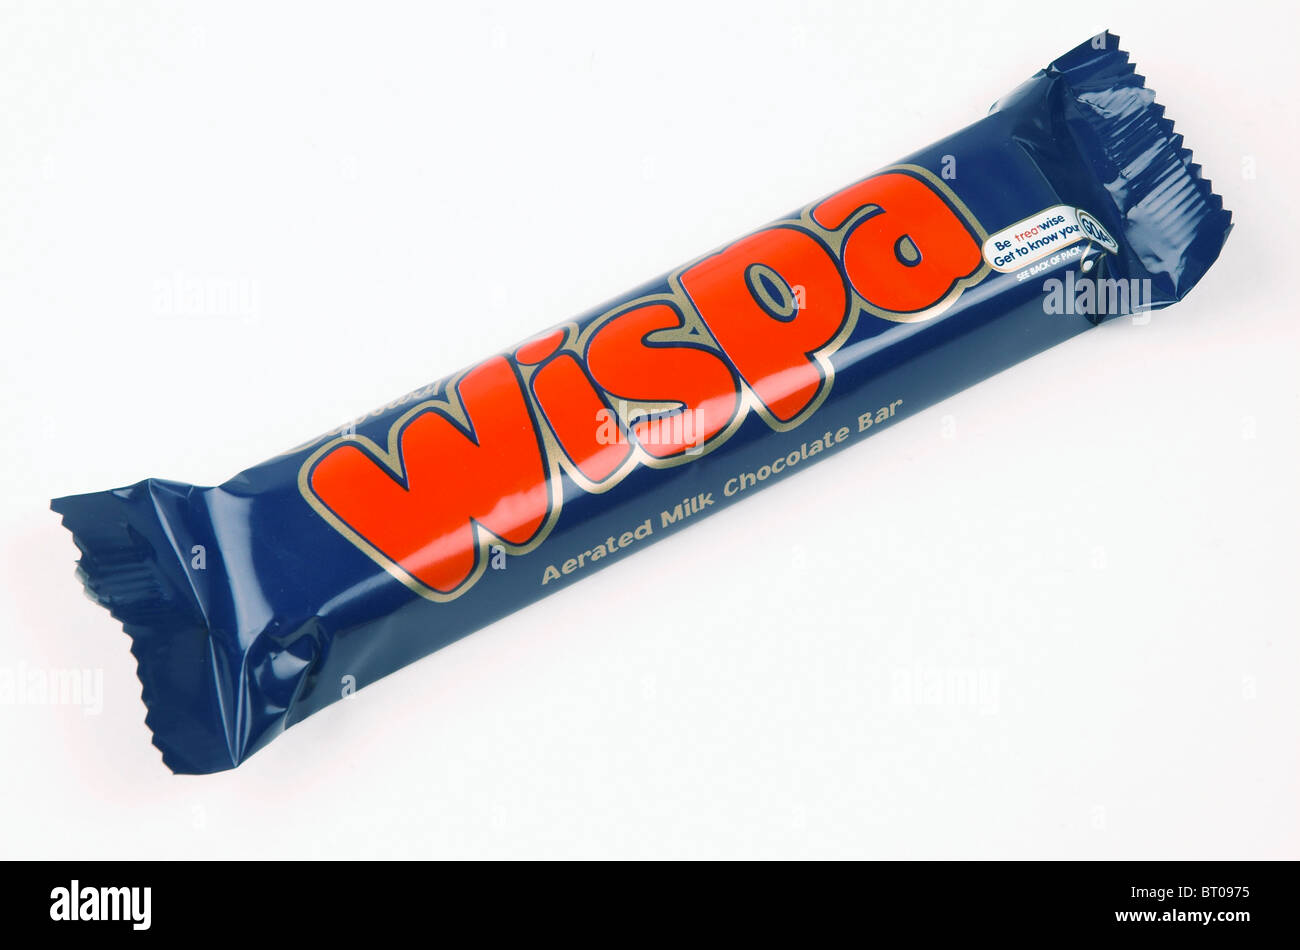 Cadbury chocolate Wispa bar delivered straight to your door - Britsuperstore